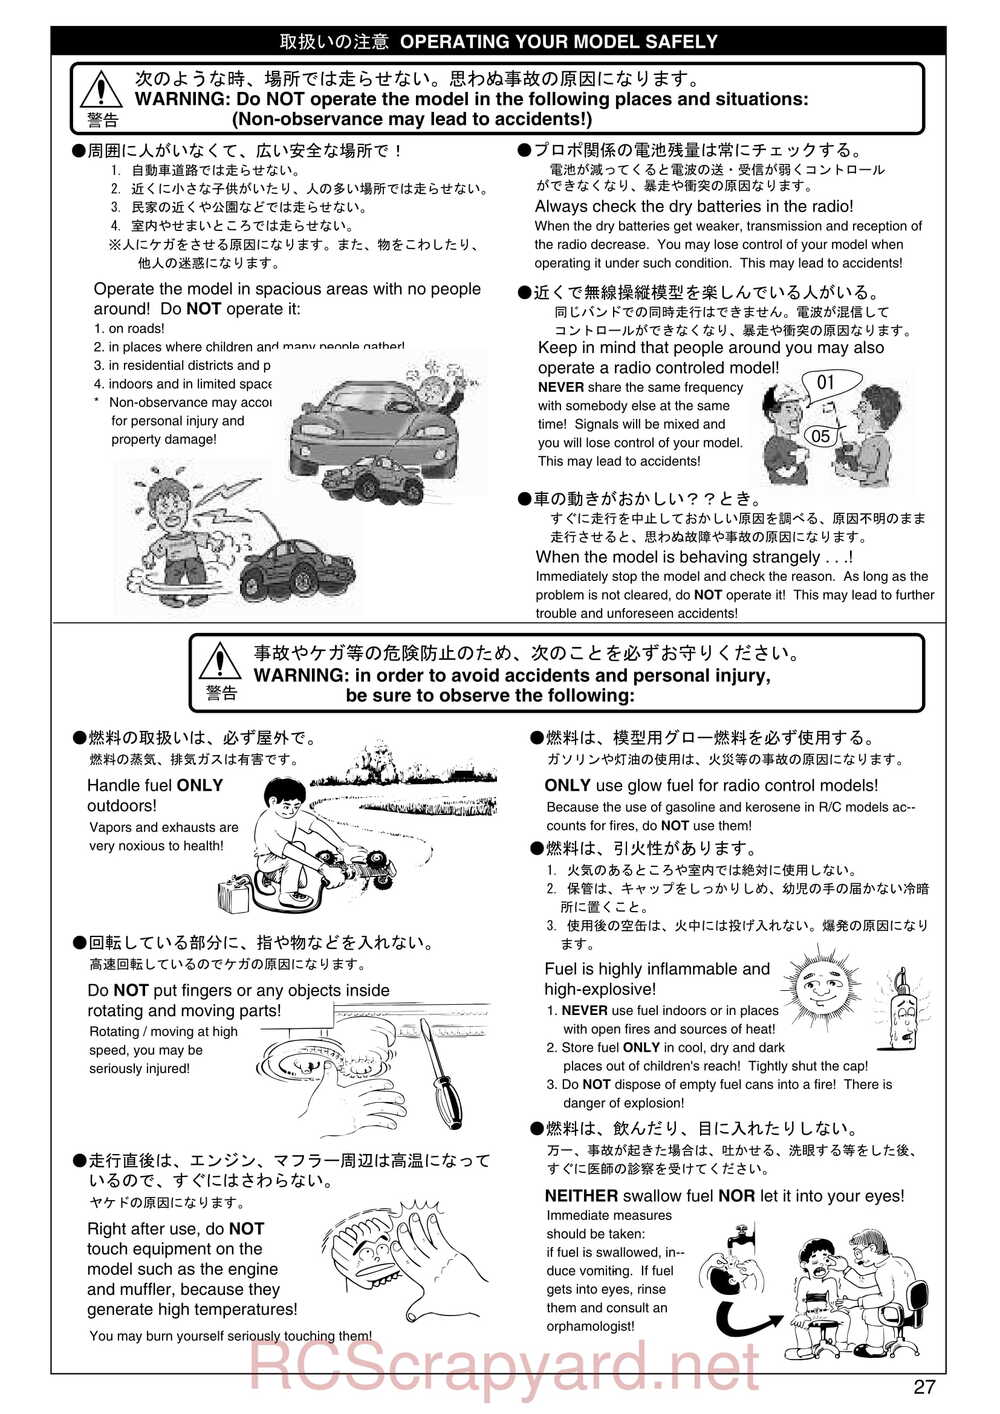 Kyosho - 31192 - Inferno-MP-7-5 Sports - Manual - Page 27